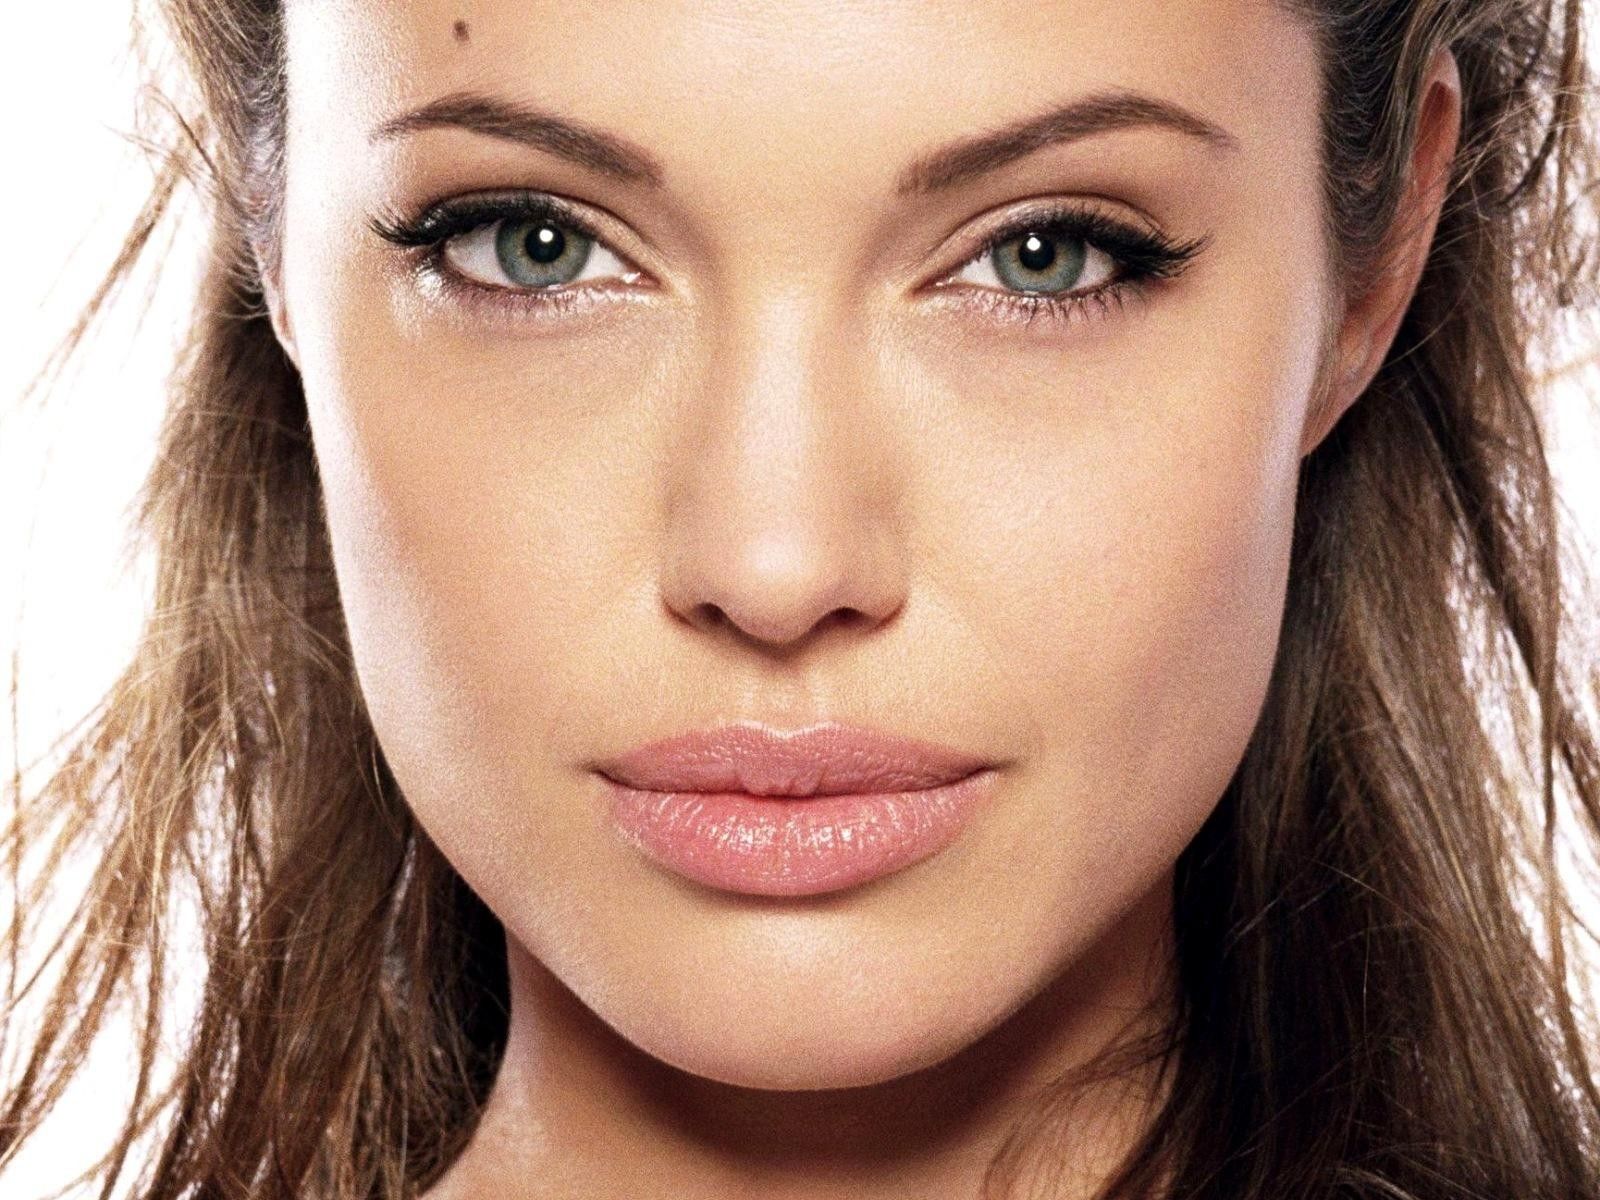 Красивое лицо код. Анджелина Джоли фото анфас. Раскосые глаза Анджелина Джоли. Макияж Анджелины Джоли. Губы Анджелины Джоли.